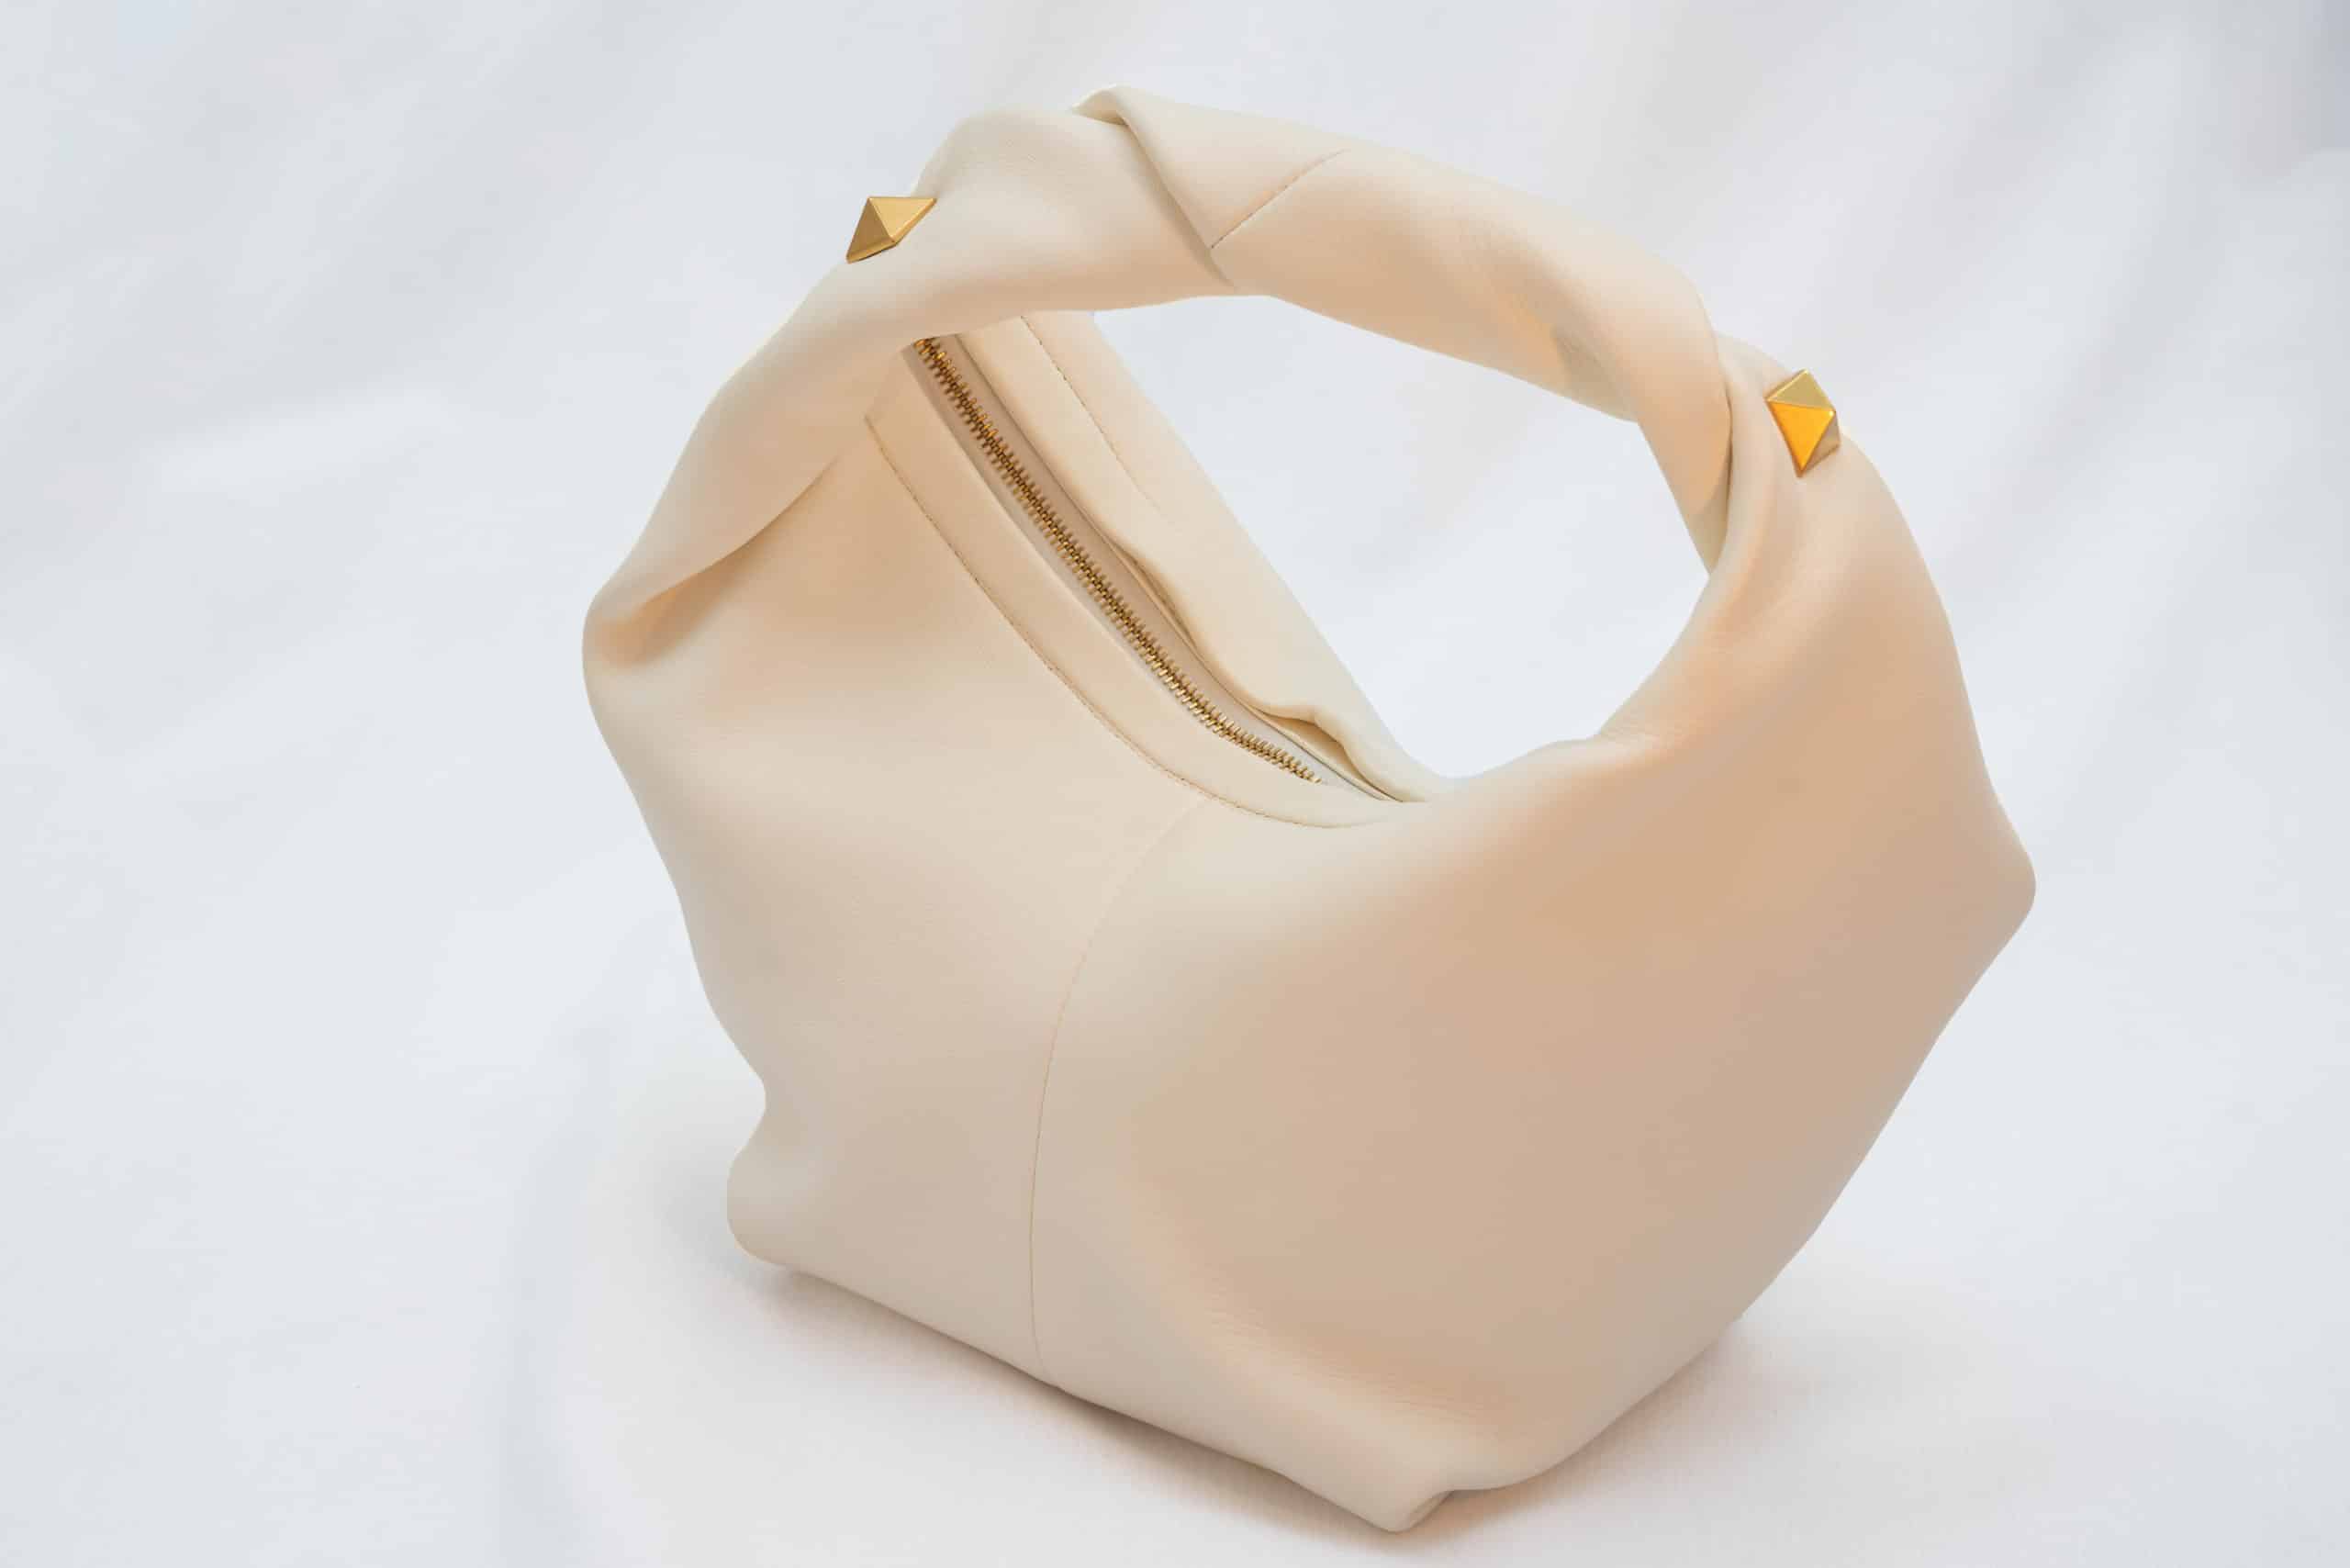 Valentino Roman Stud Small Leather Hobo bag - The Luxury Flavor